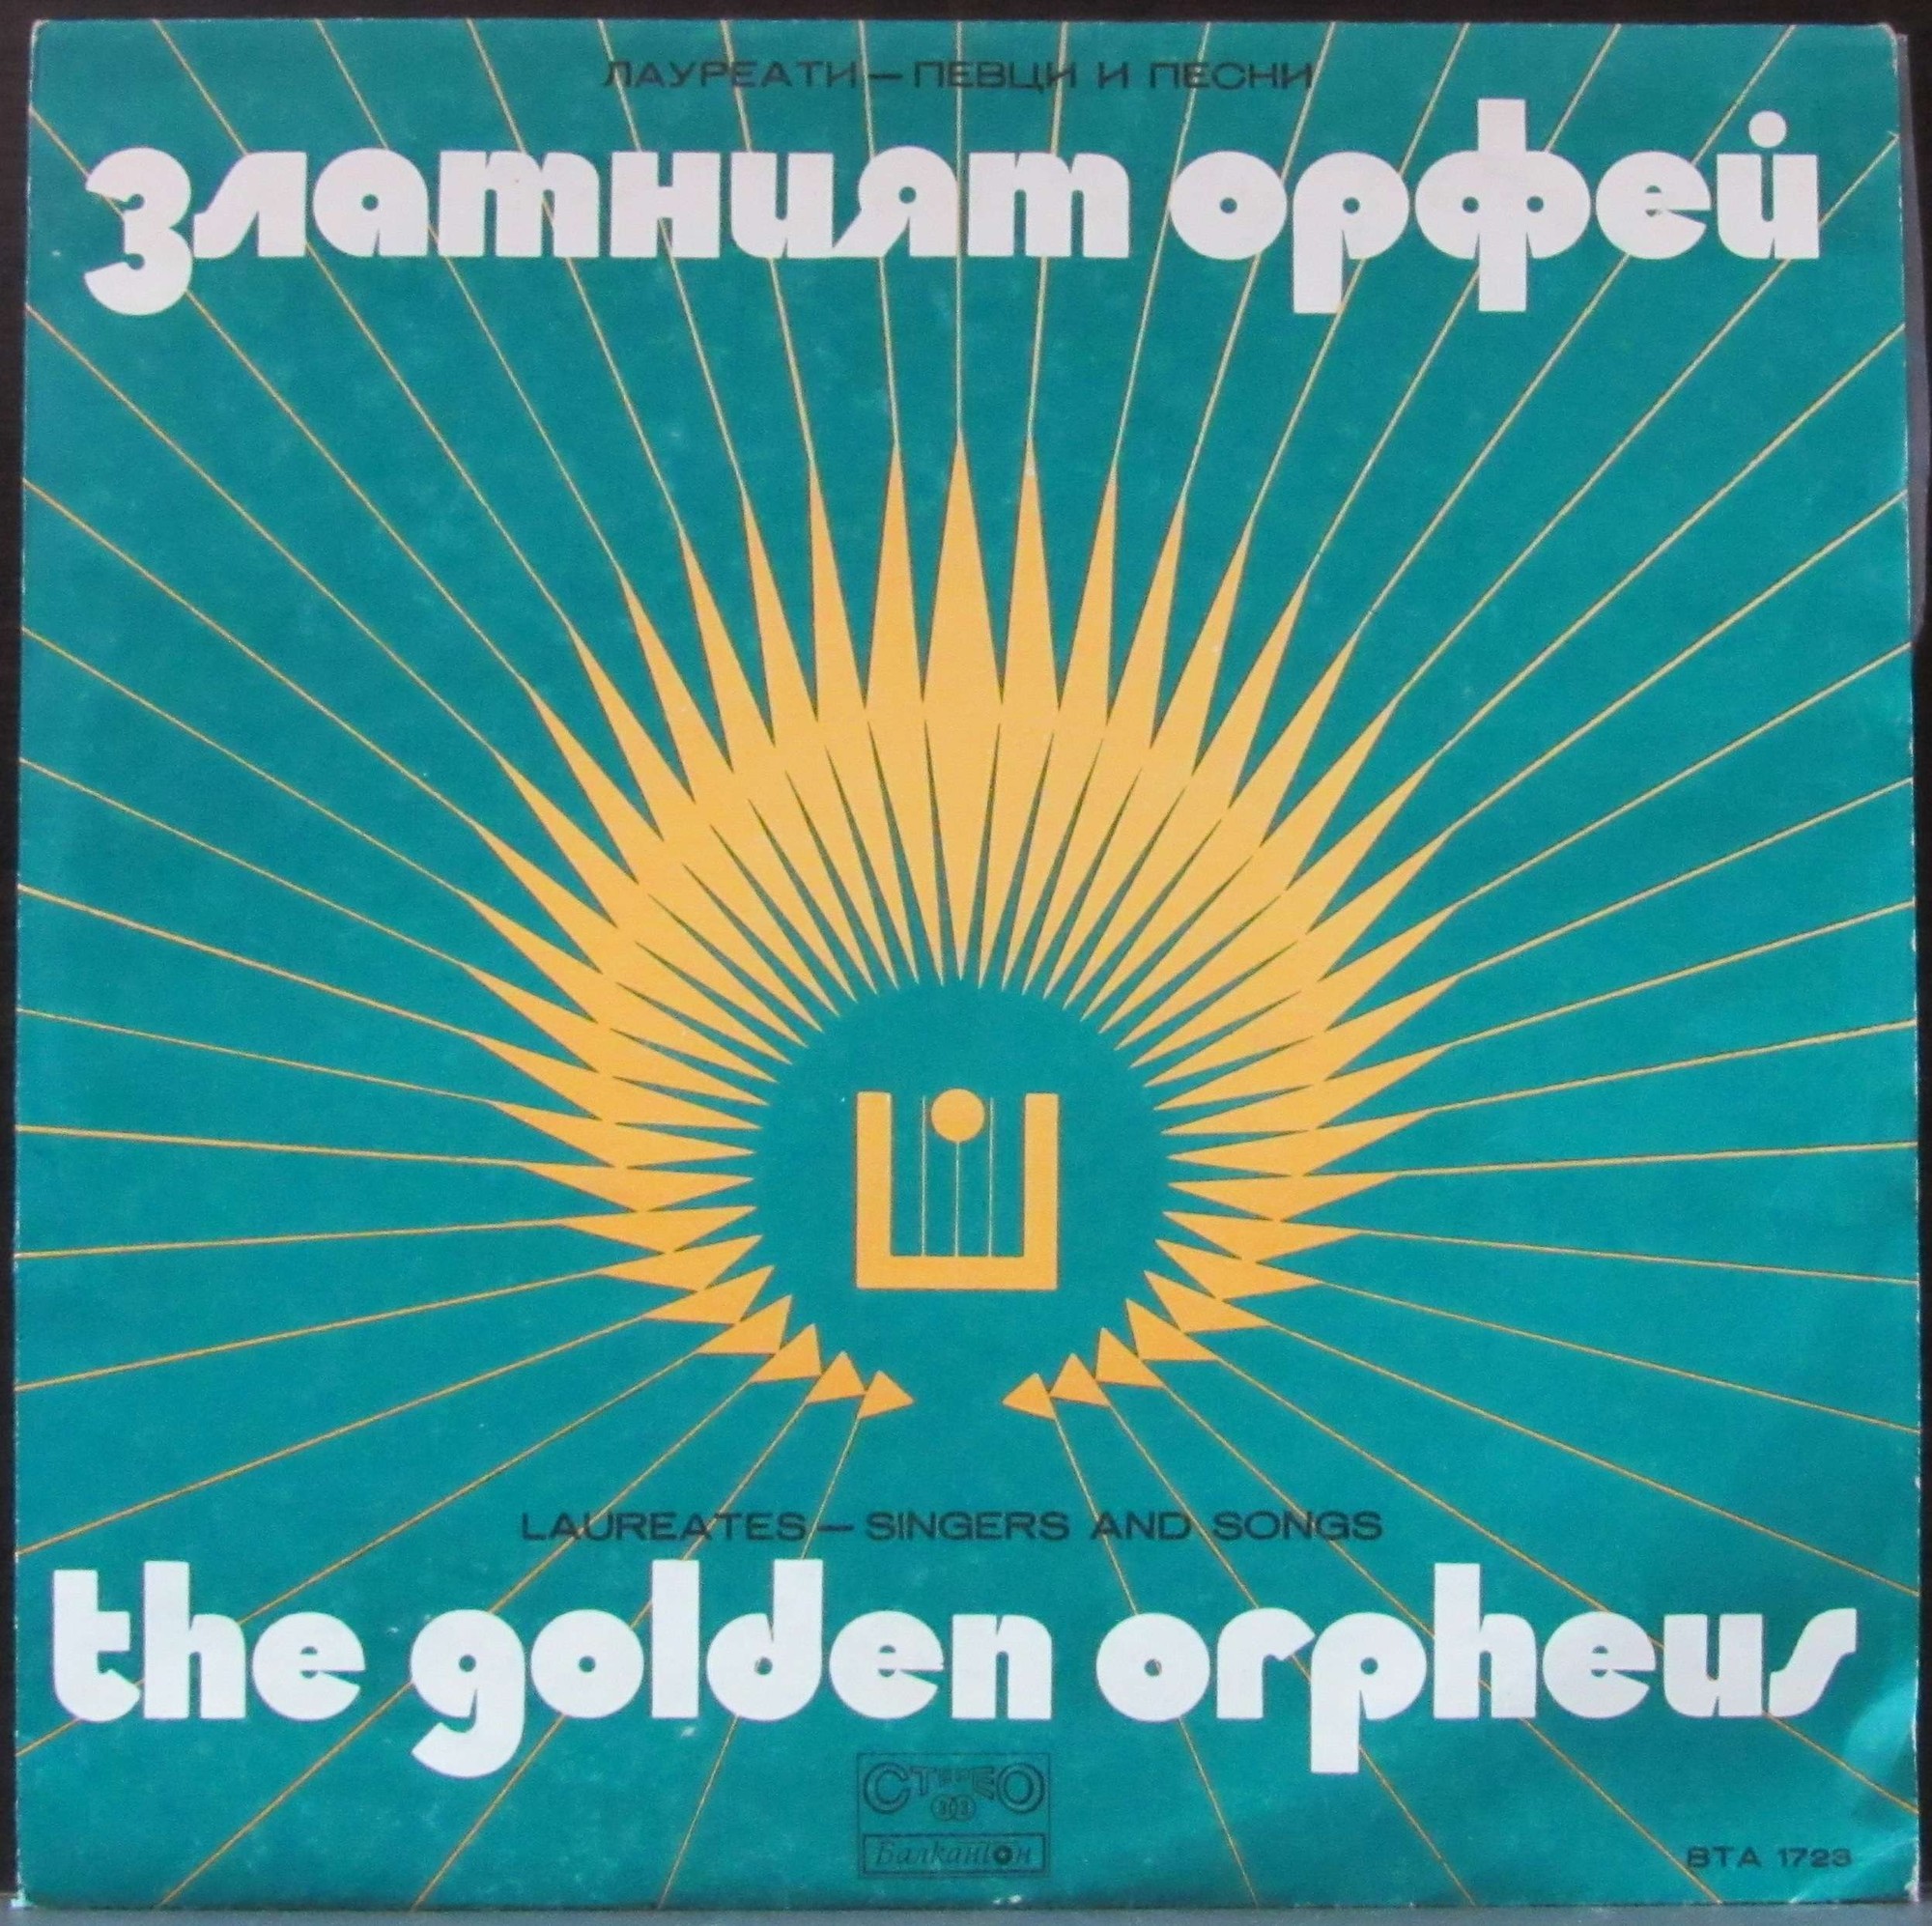 Златният Орфей '74. Х-ти юбилеен фестивал. Лауреати - певци и песни